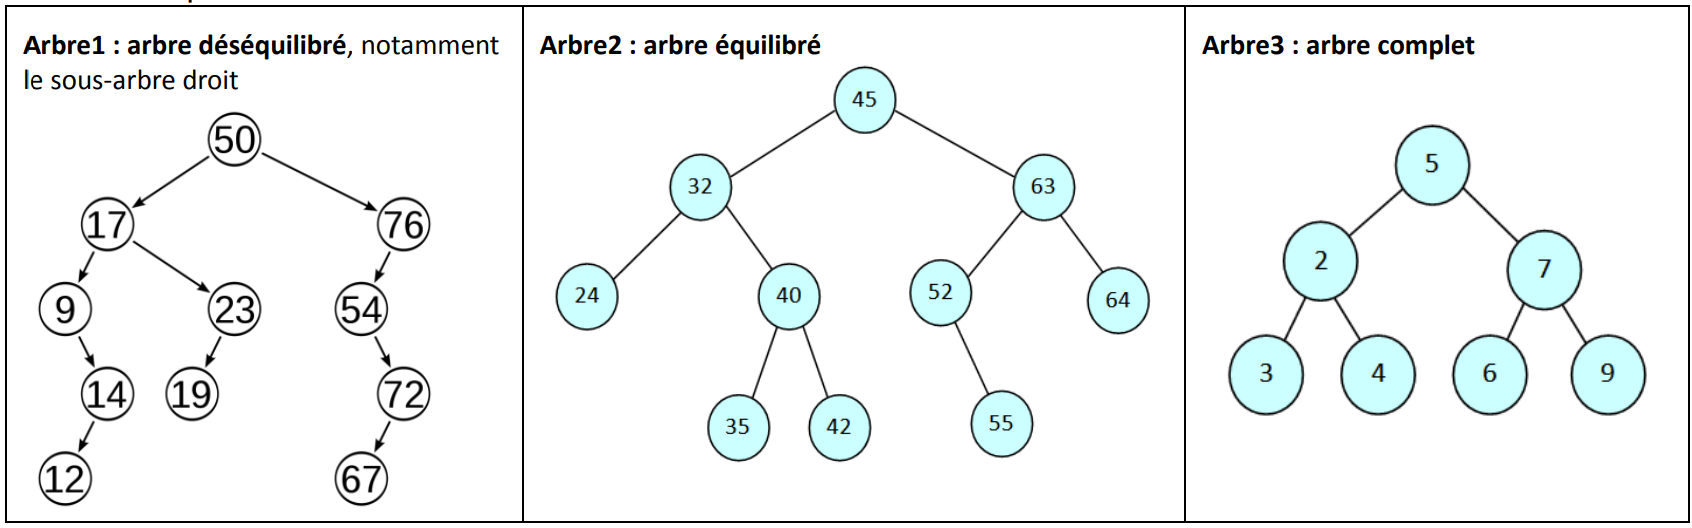 Exemple d'arbres binaires